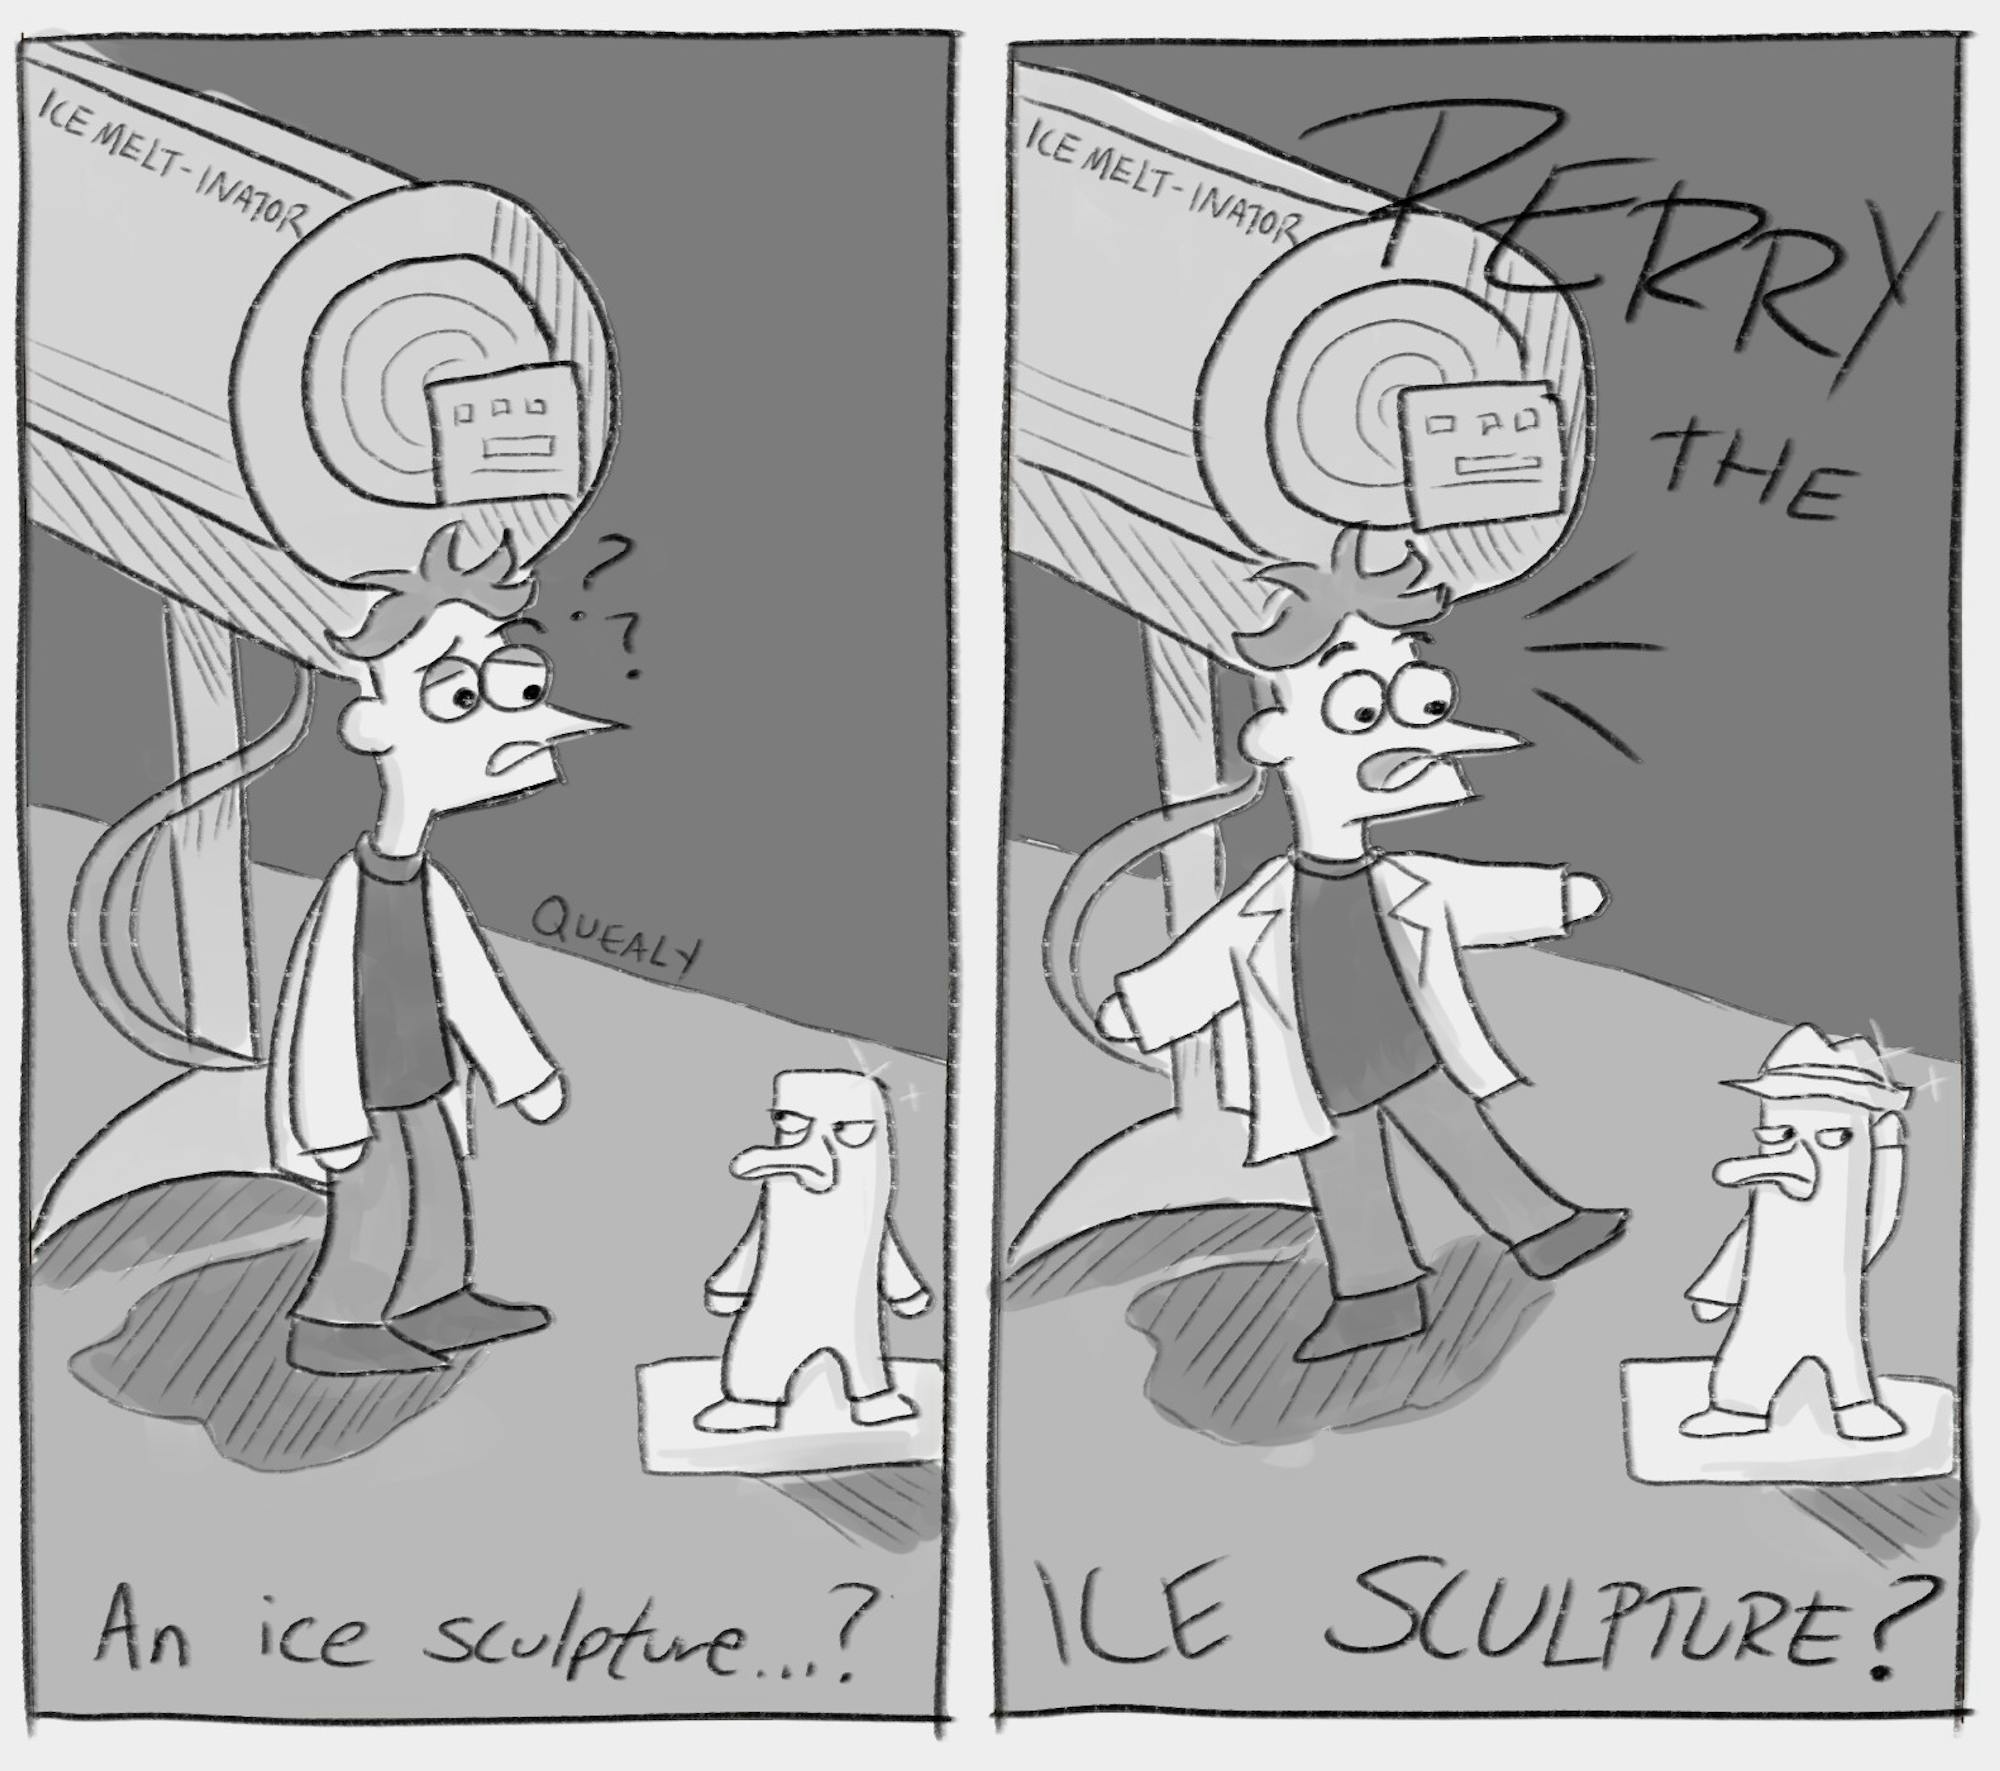 Perry the Ice Sculputre!.jpg